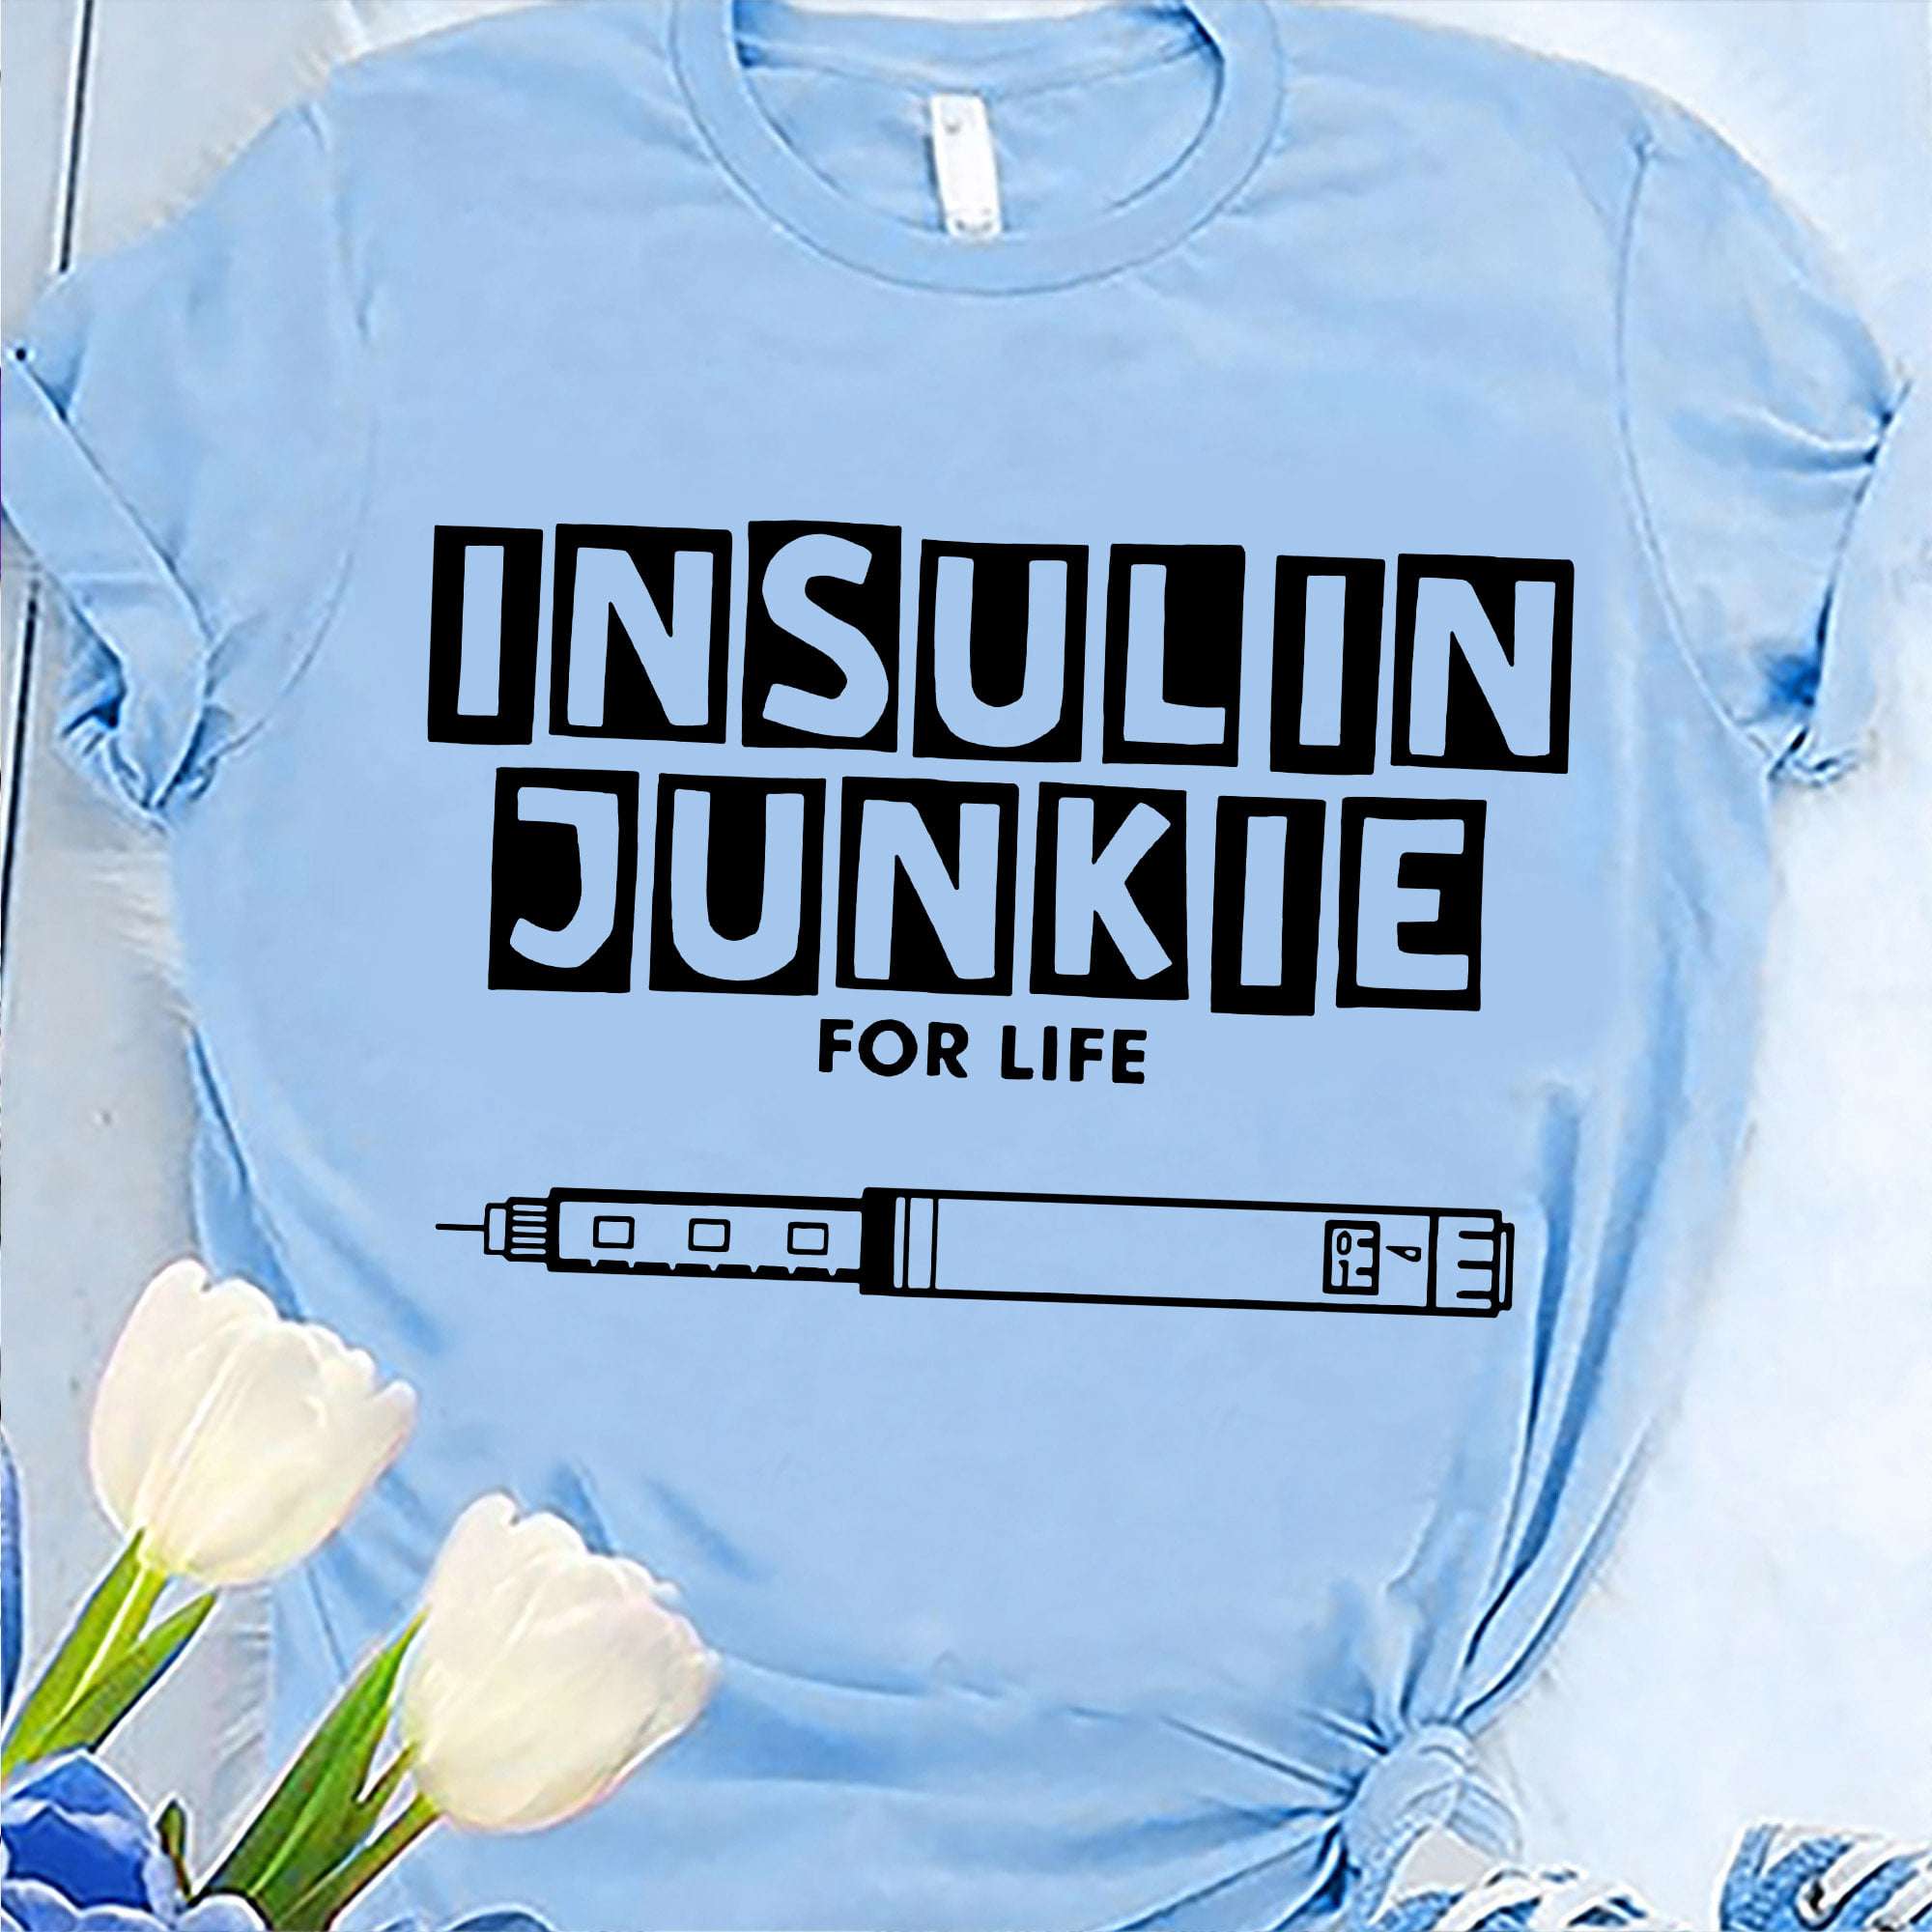 Insulin Syringe - Insulin Junkie For Life